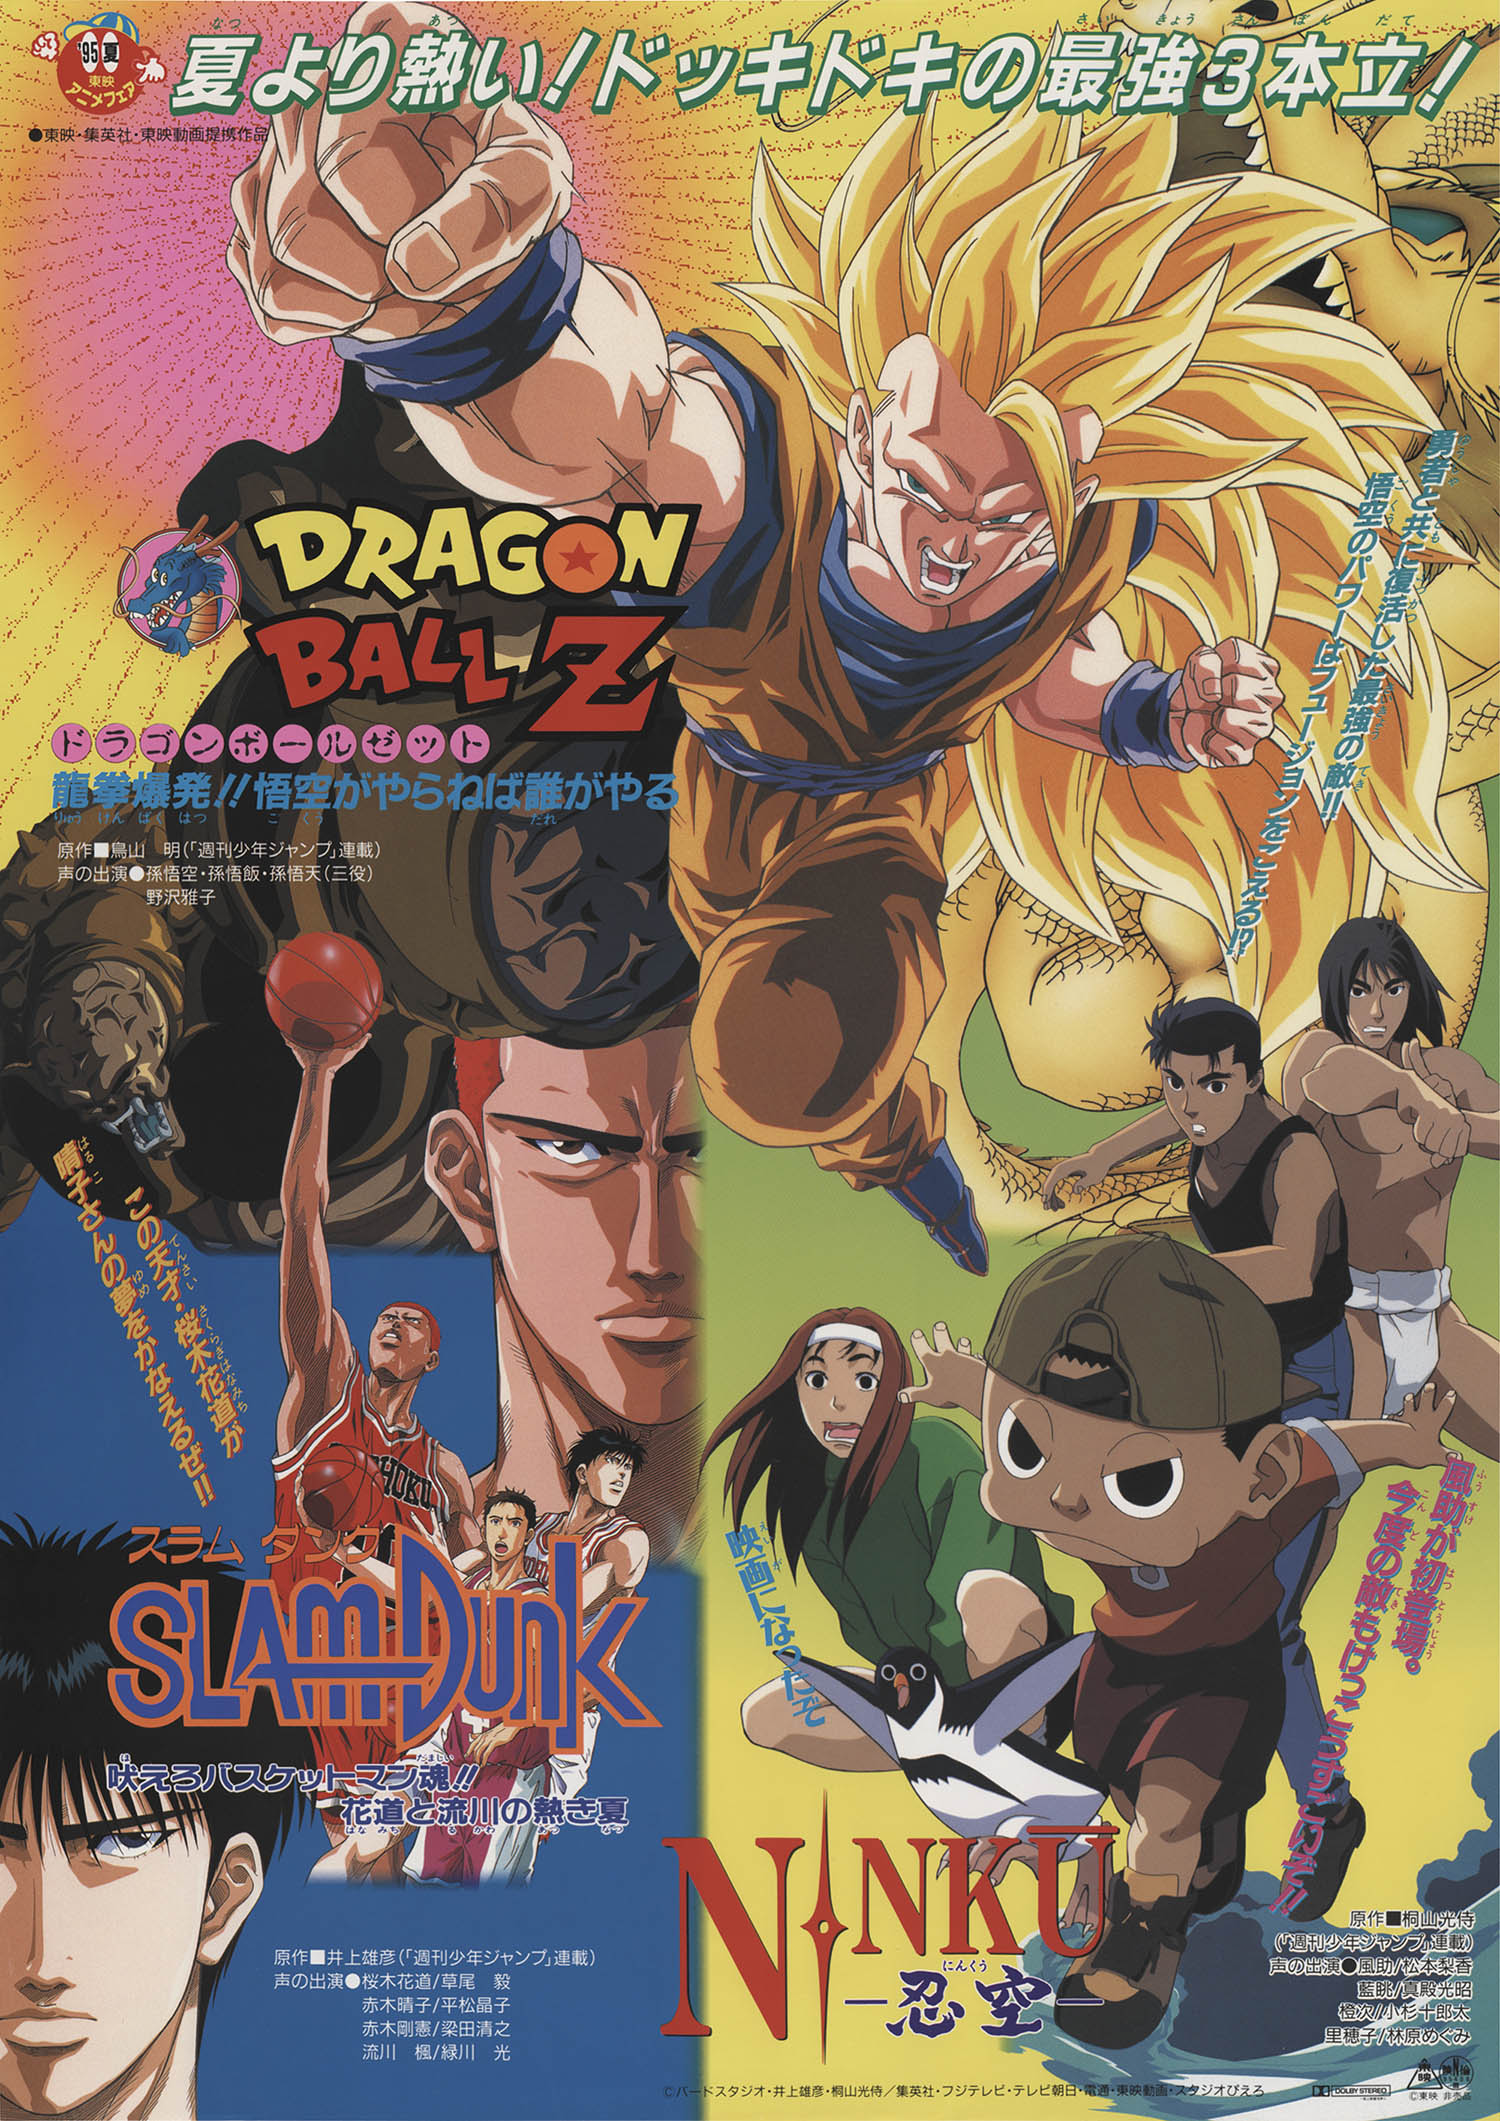 Anime Fair 95 Summer Poster